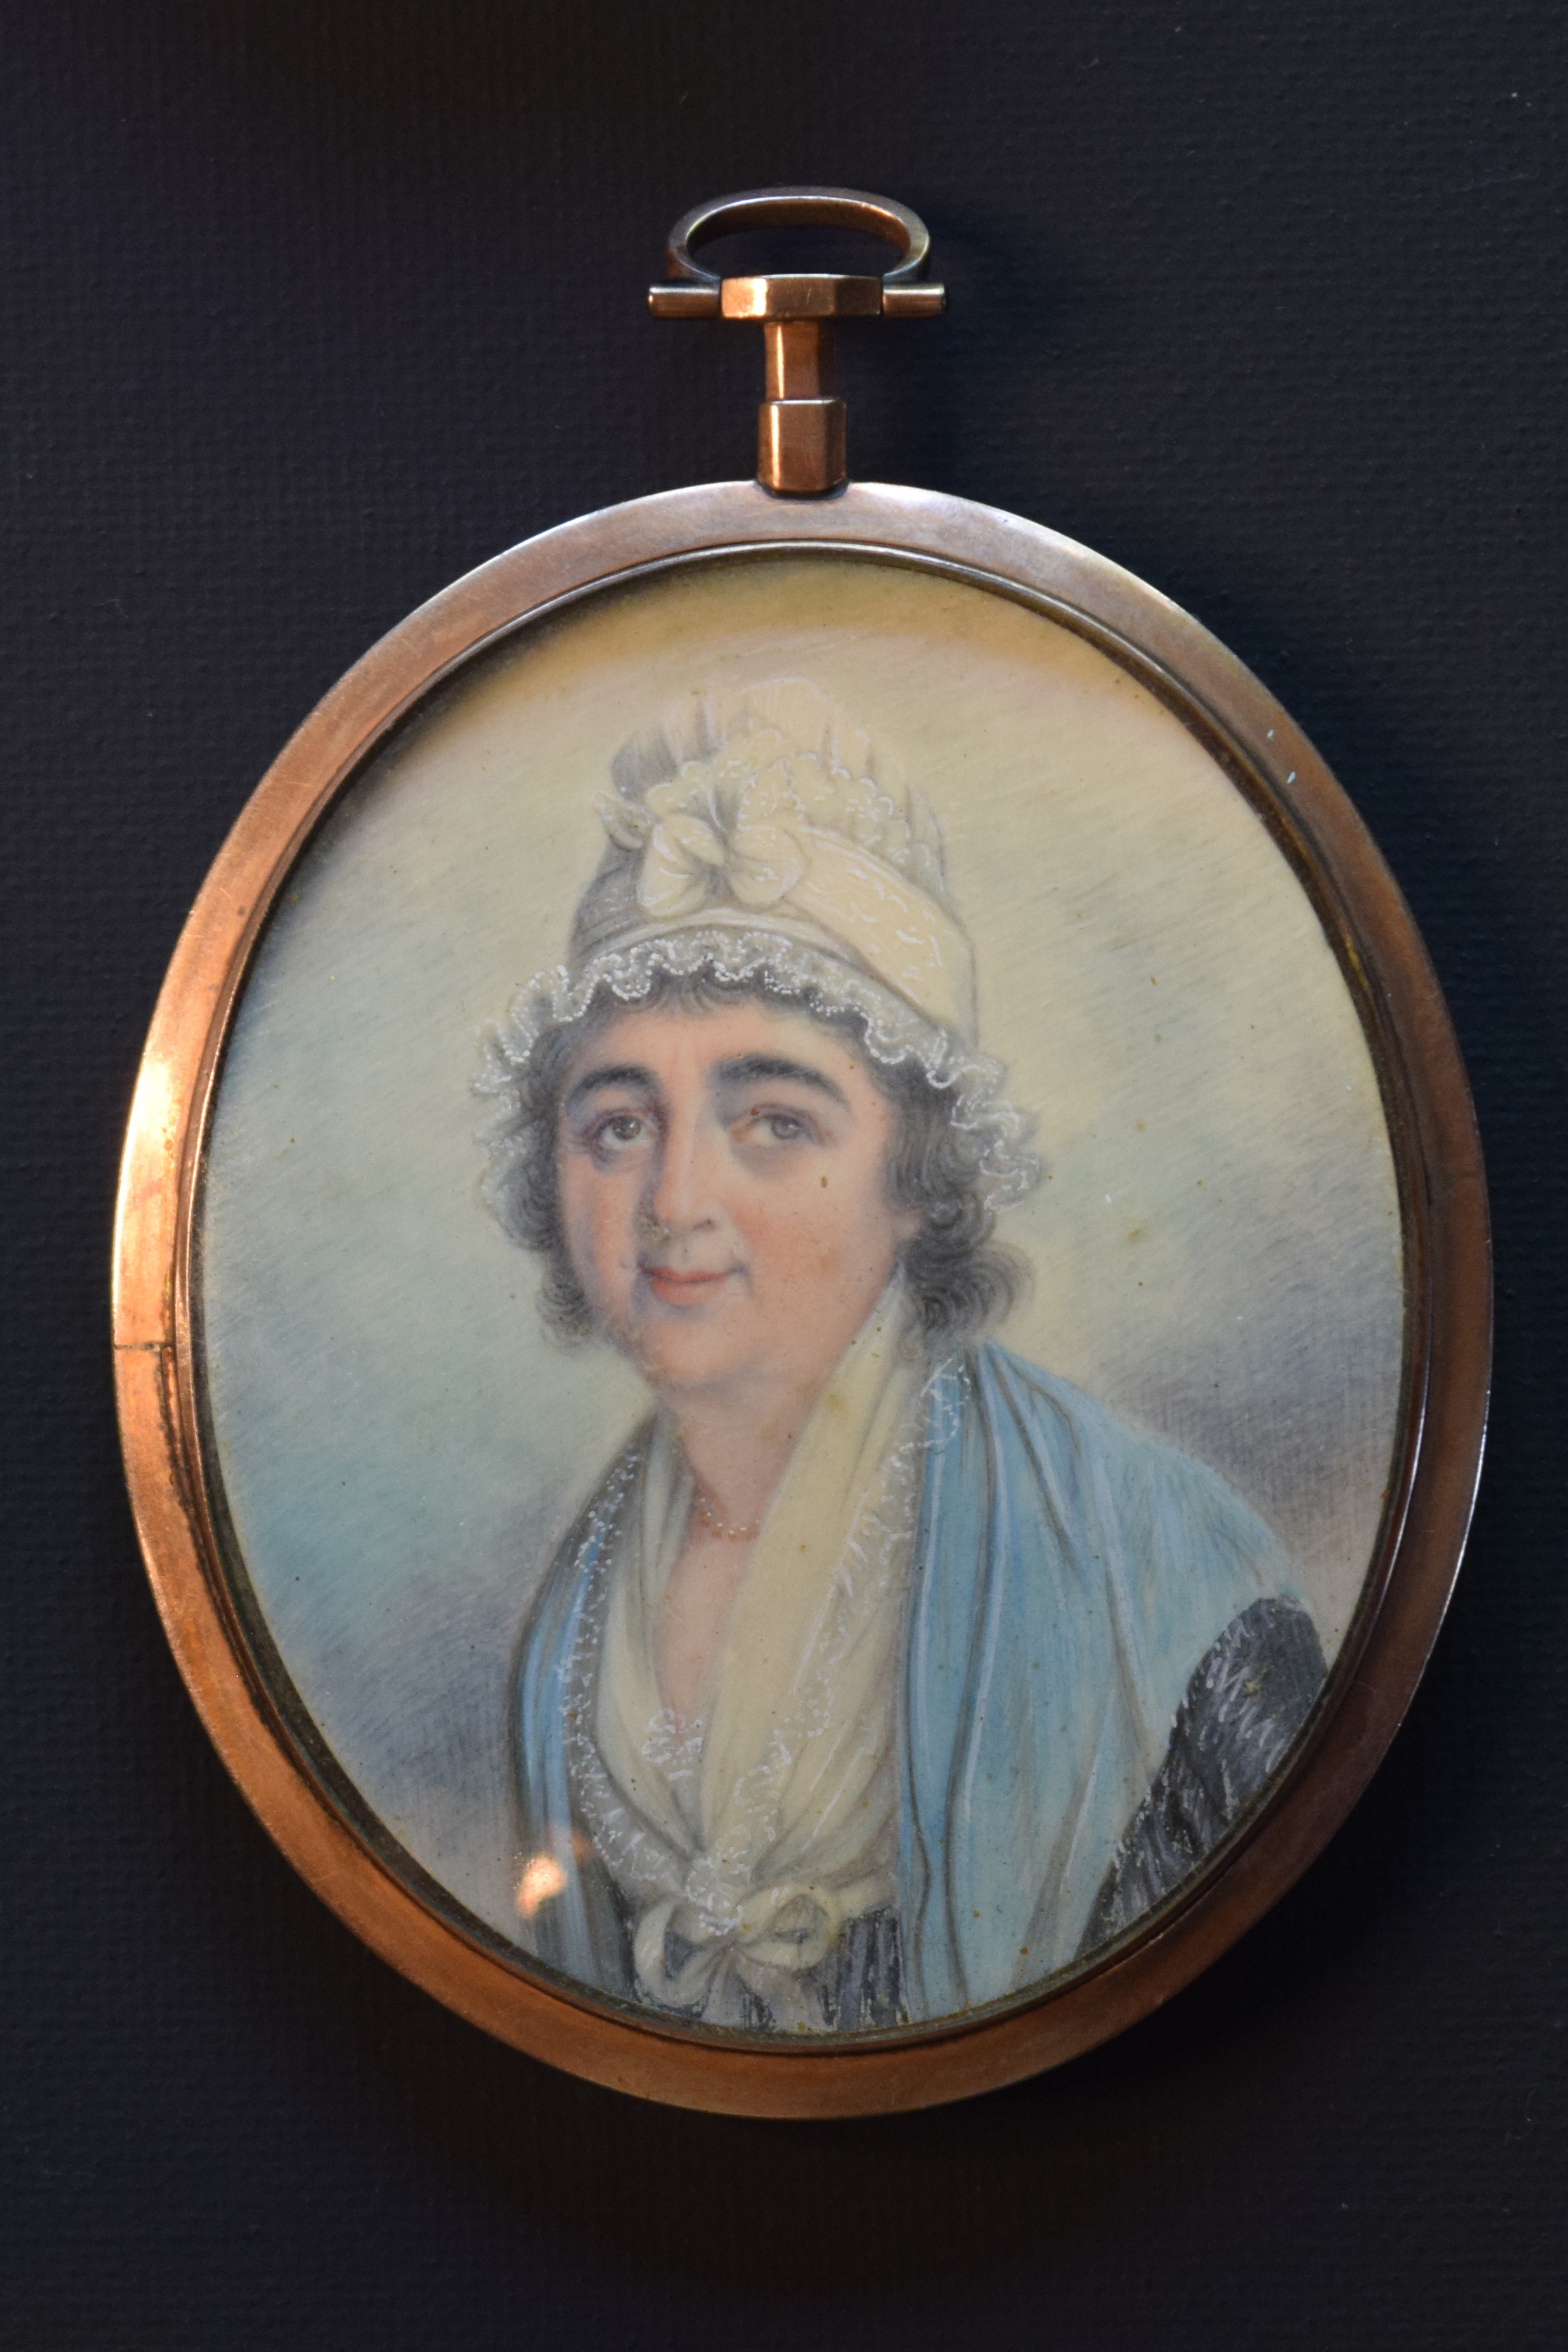 A close-up of the Charity Lushington miniature portrait